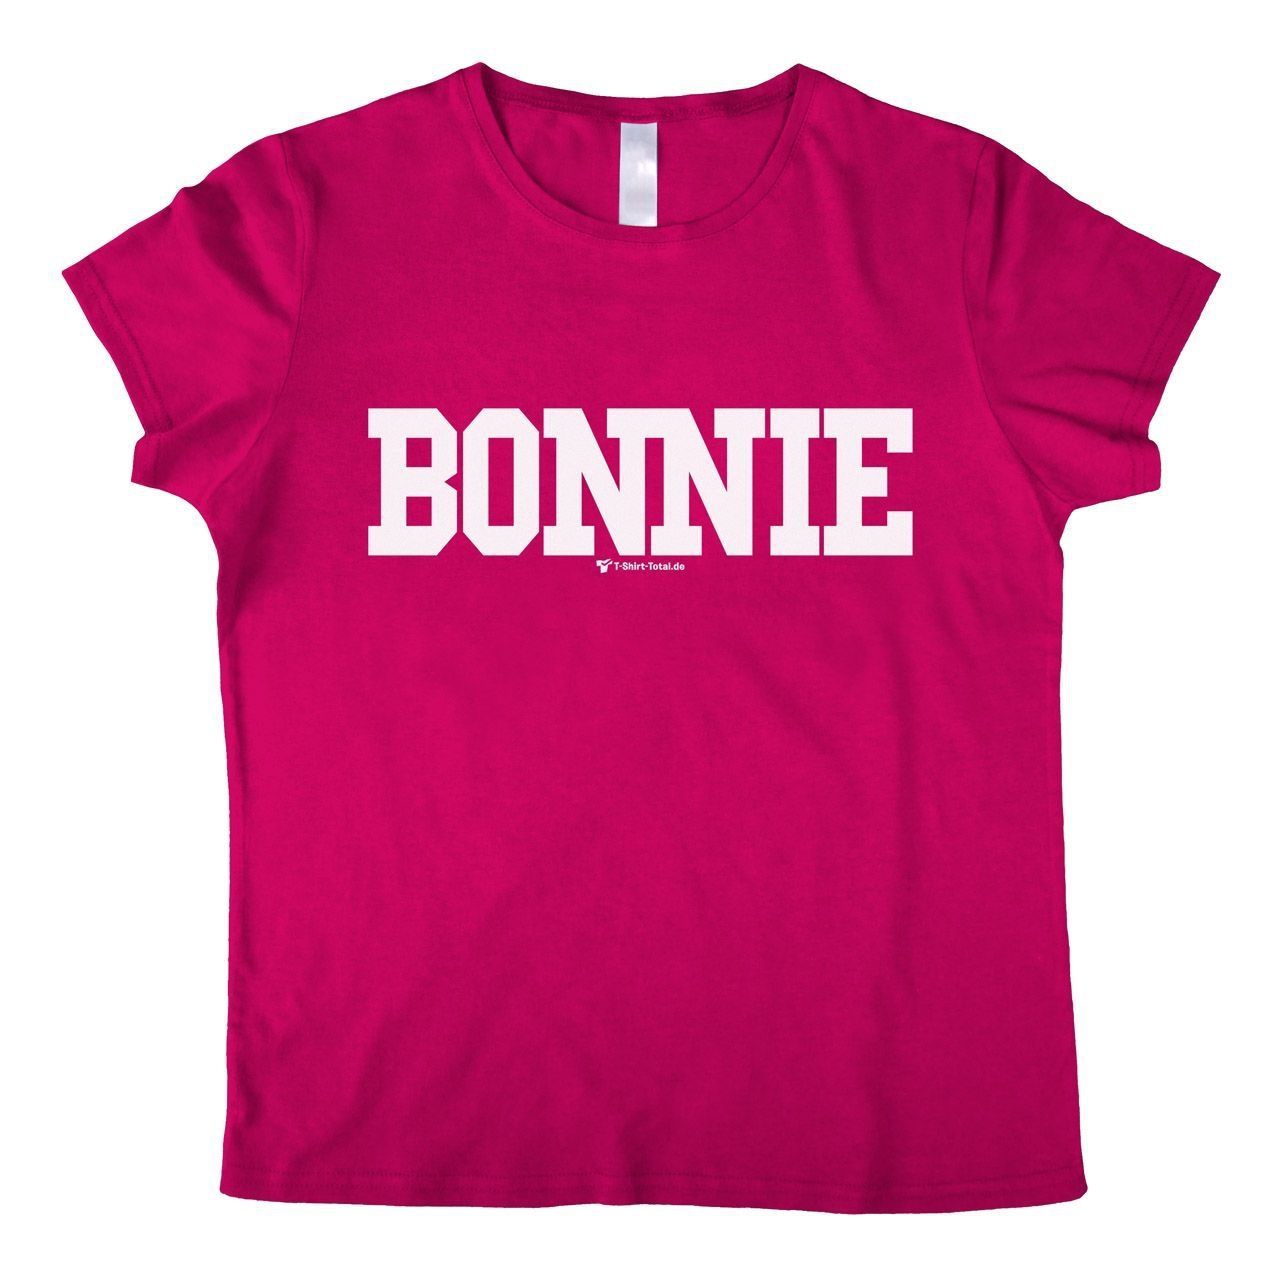 Bonnie Woman T-Shirt pink Large